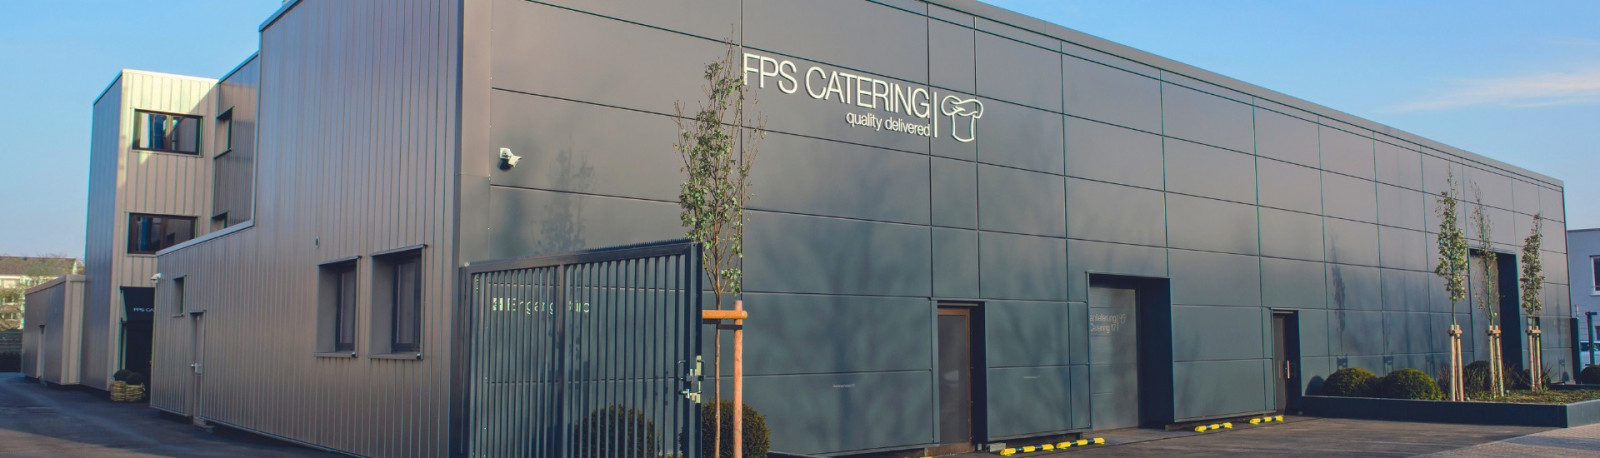 FPS Catering Jobportal Standorte Header v2